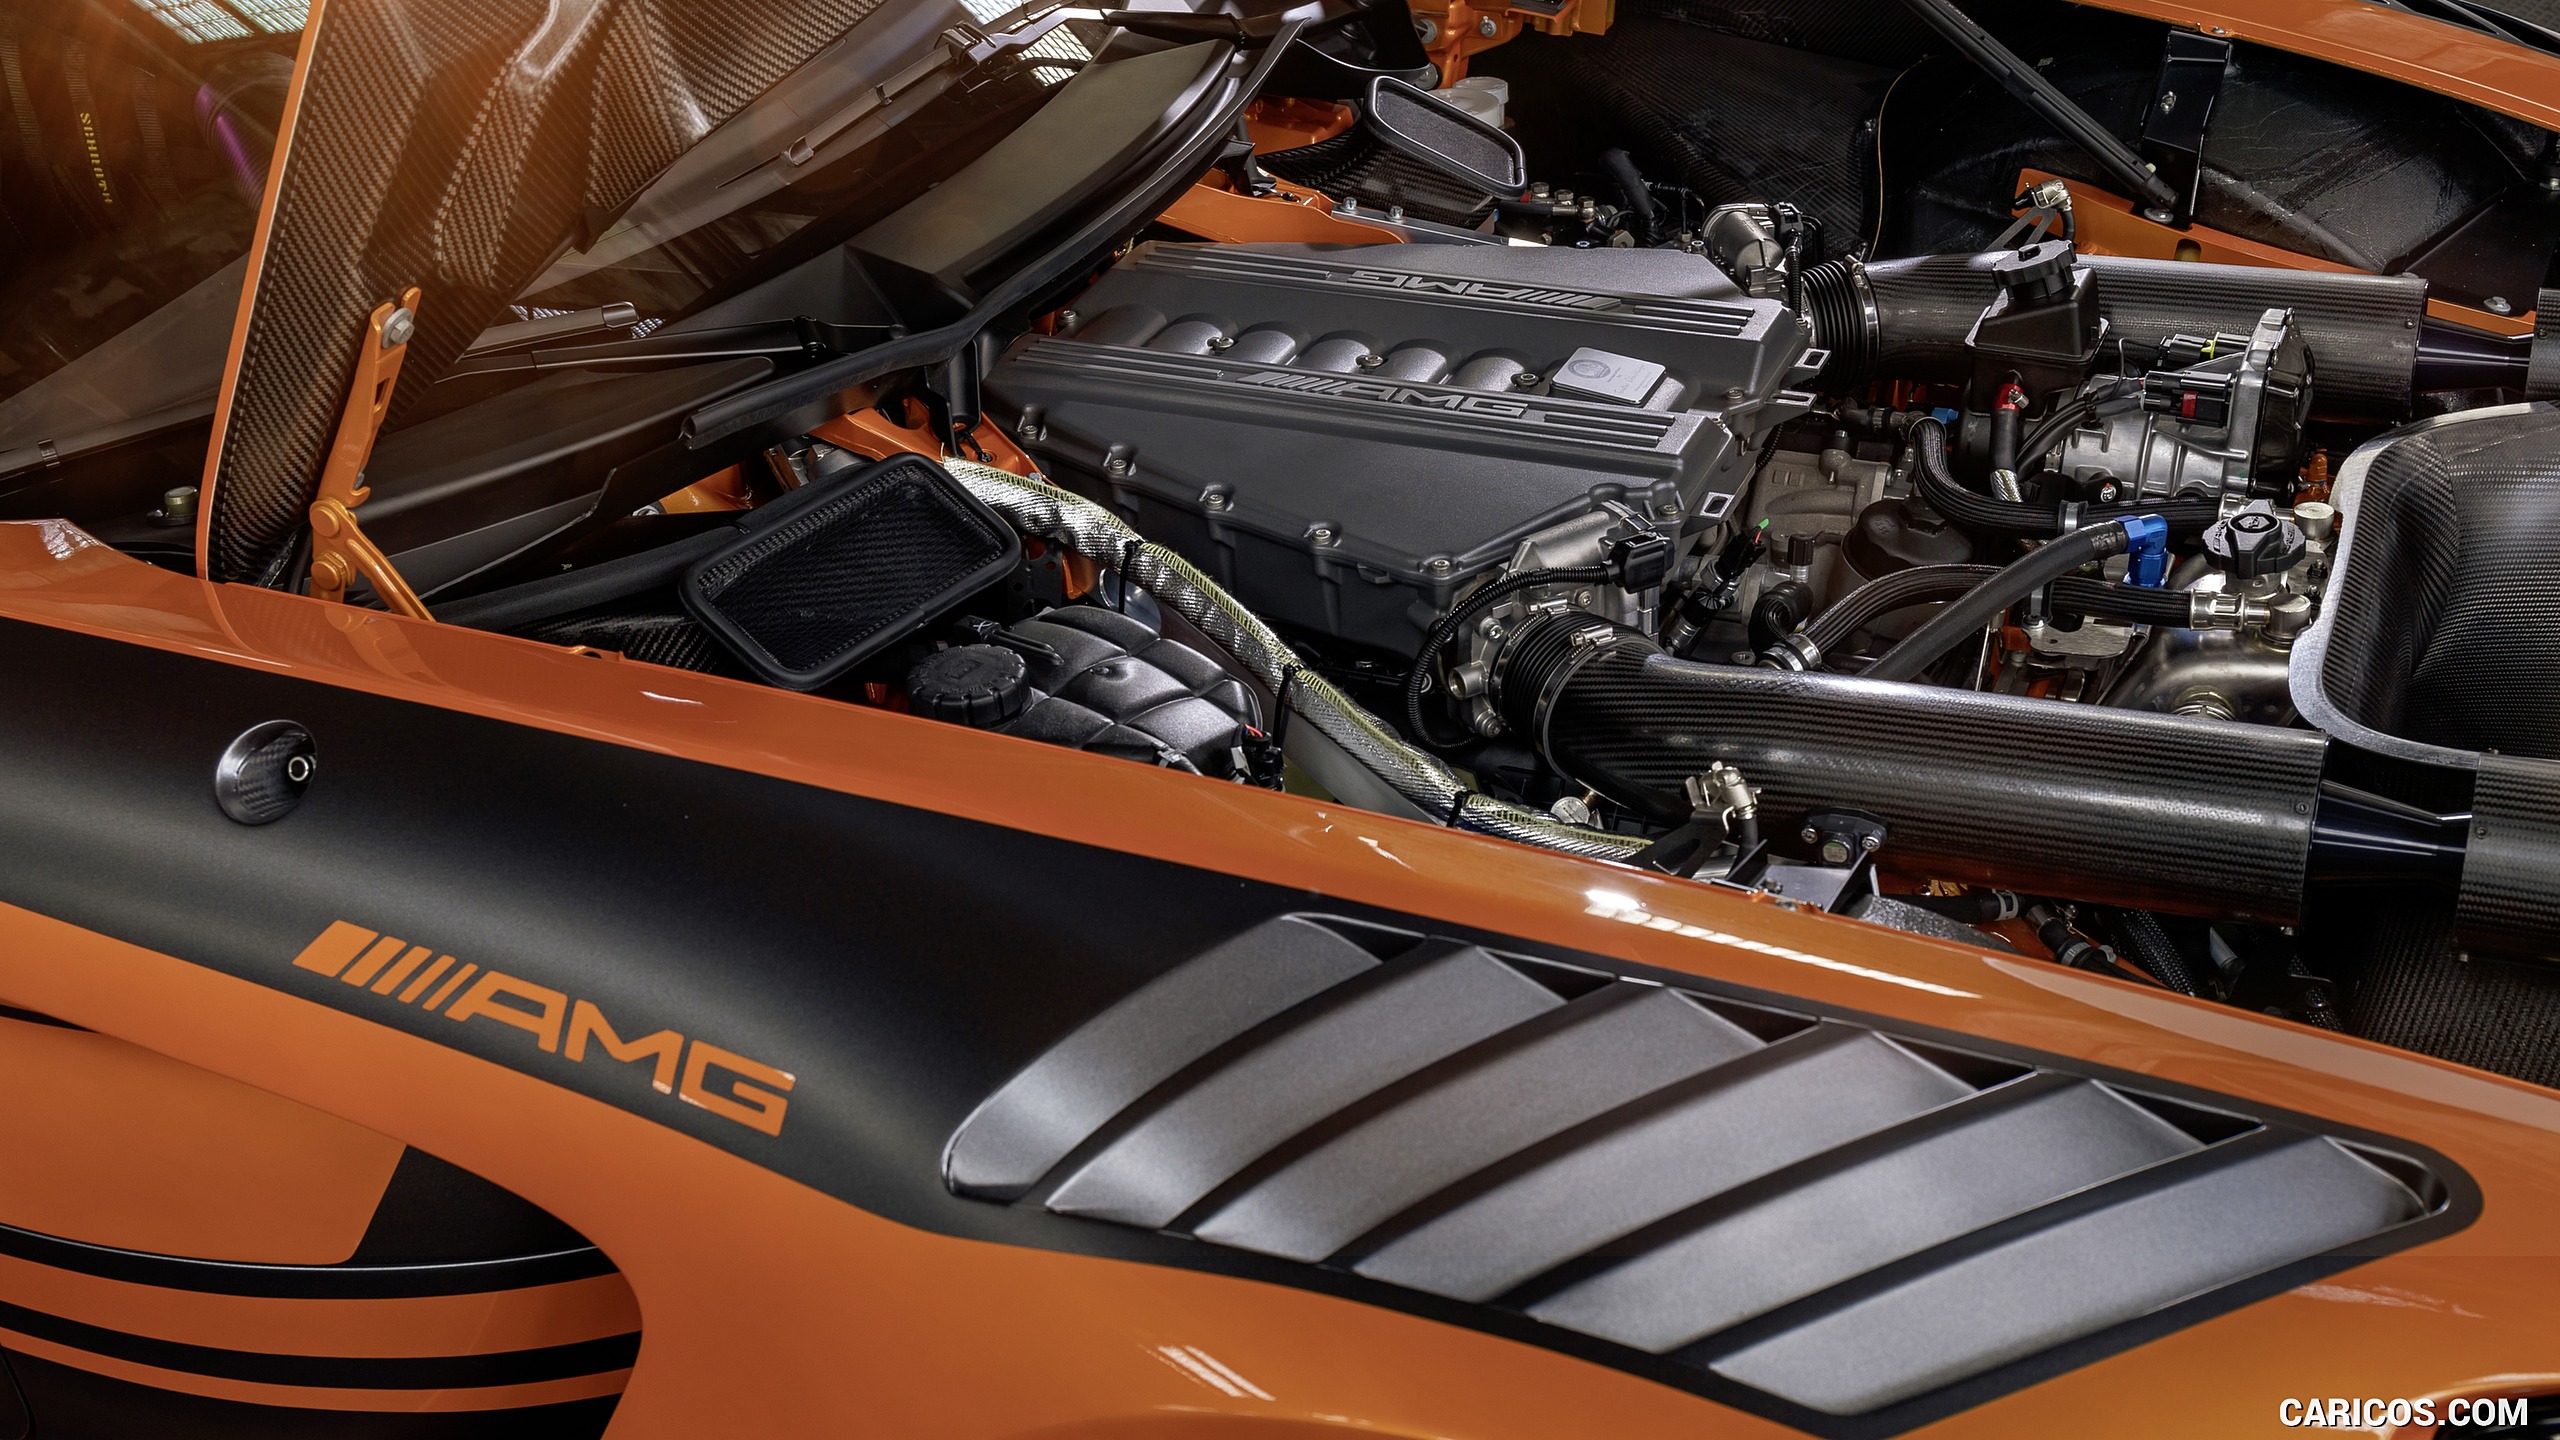 2020 Mercedes-AMG GT3 - Engine, #7 of 12